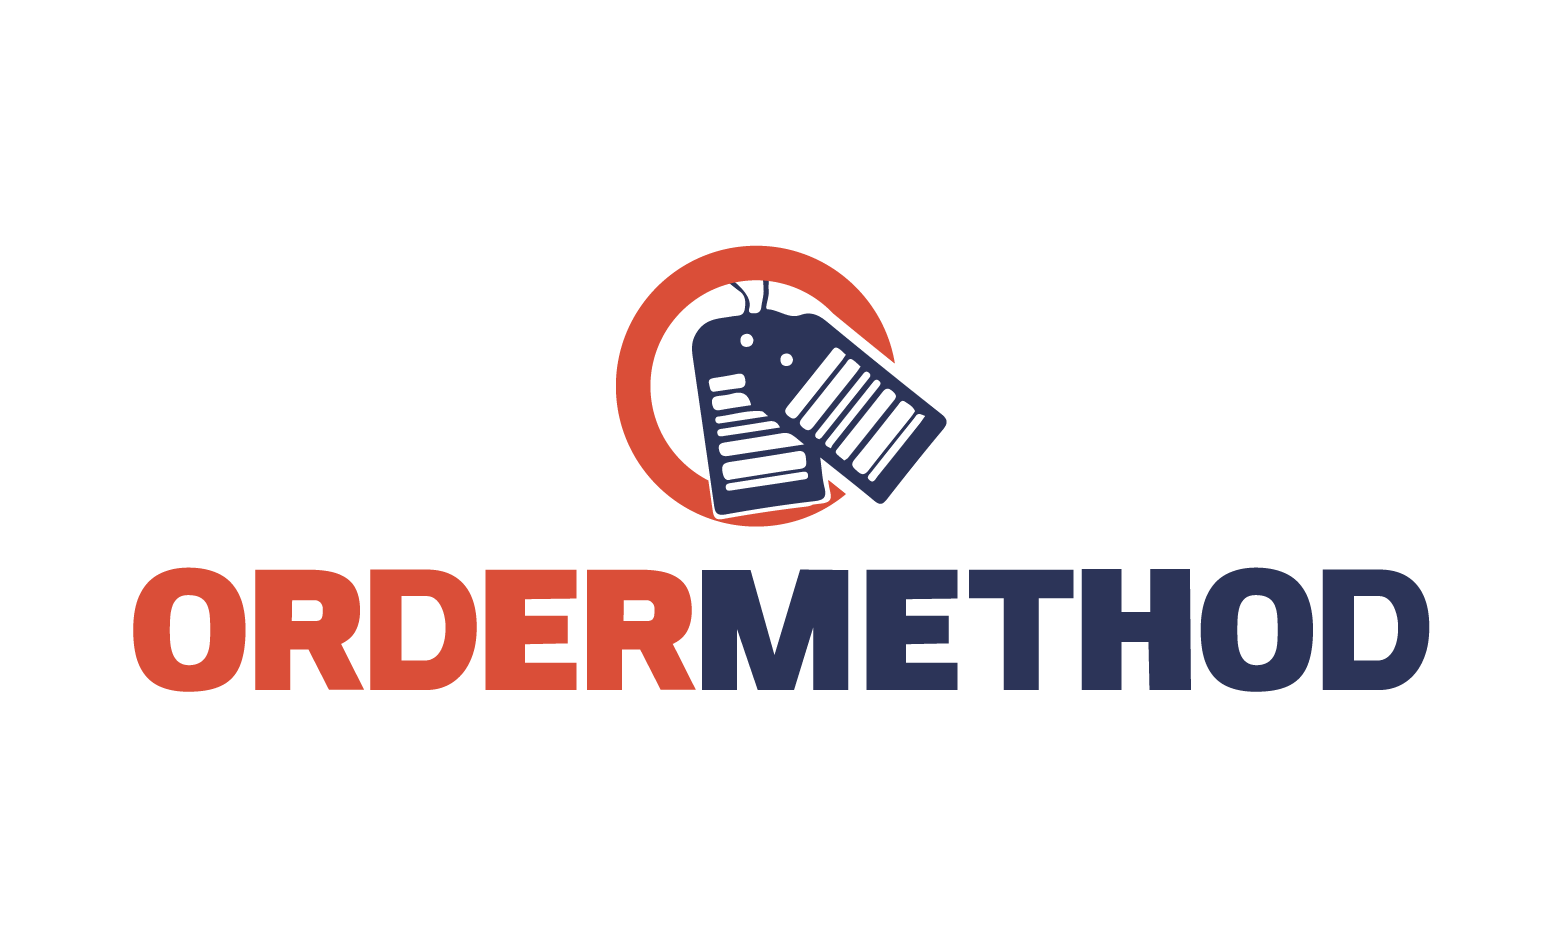 OrderMethod.com - Creative brandable domain for sale